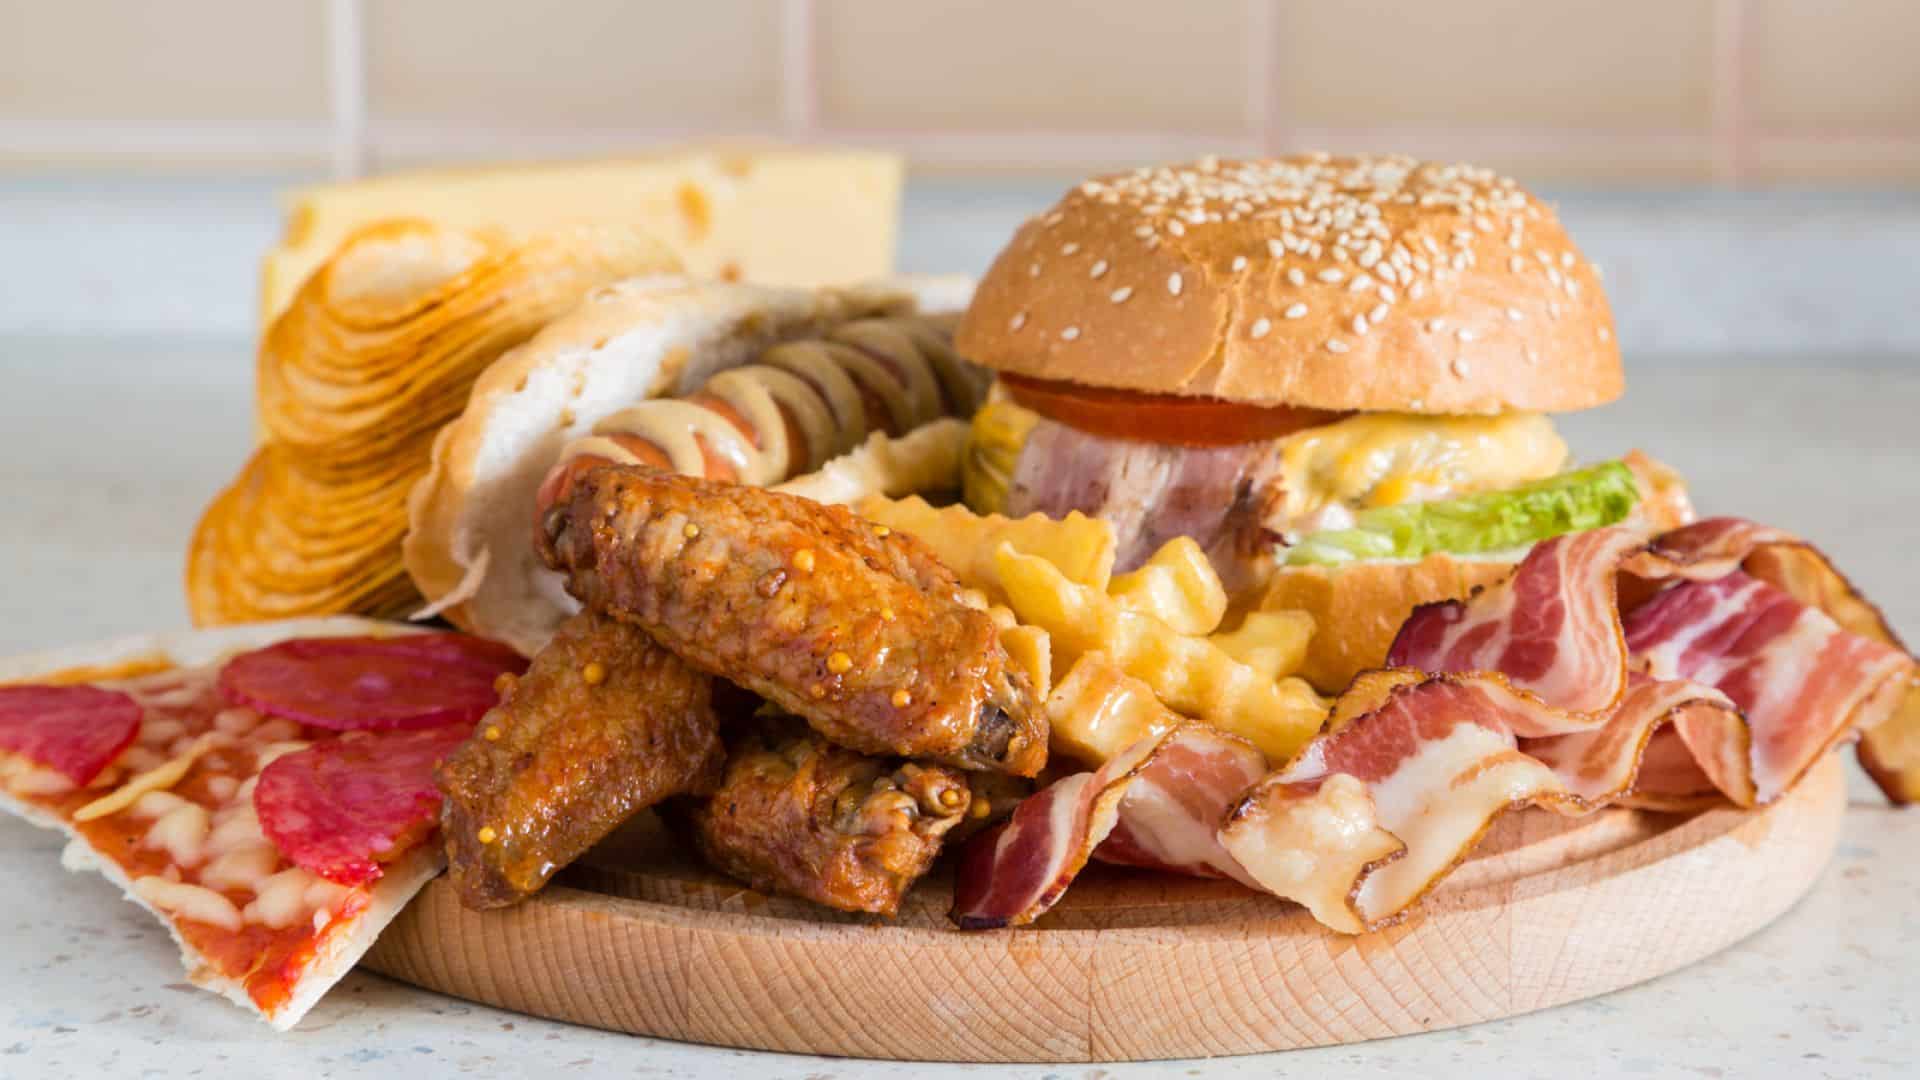 Berbagai junk food di atas piring kayu, pizza, hamburger, sosis, bacon